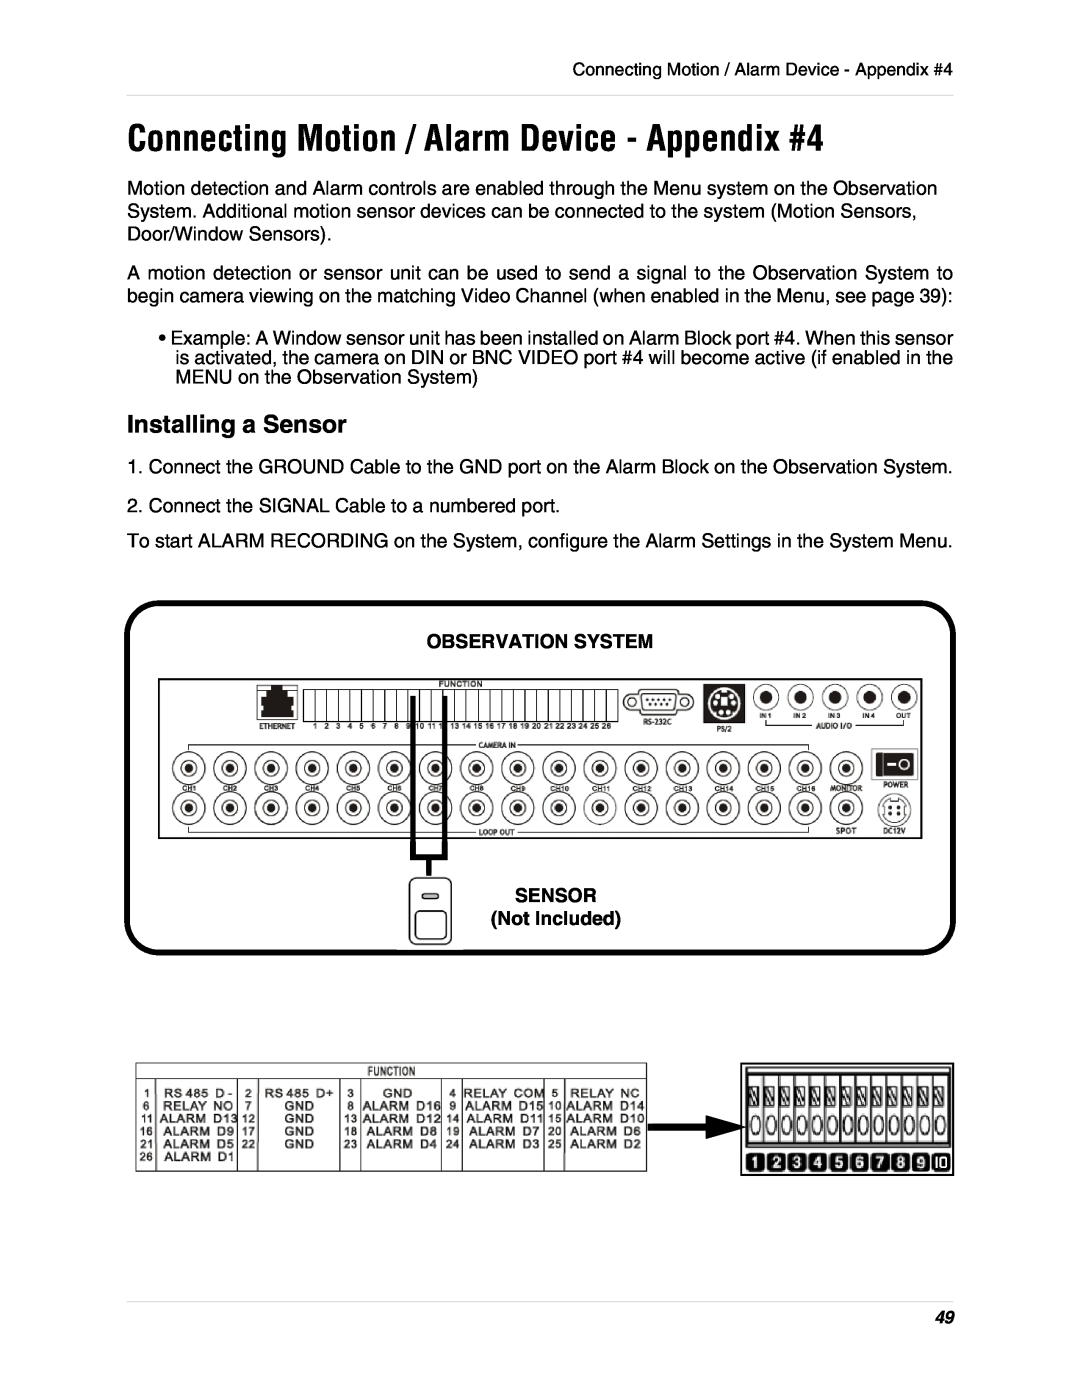 LOREX Technology L19lD1616501 instruction manual Connecting Motion / Alarm Device - Appendix #4, Installing a Sensor 